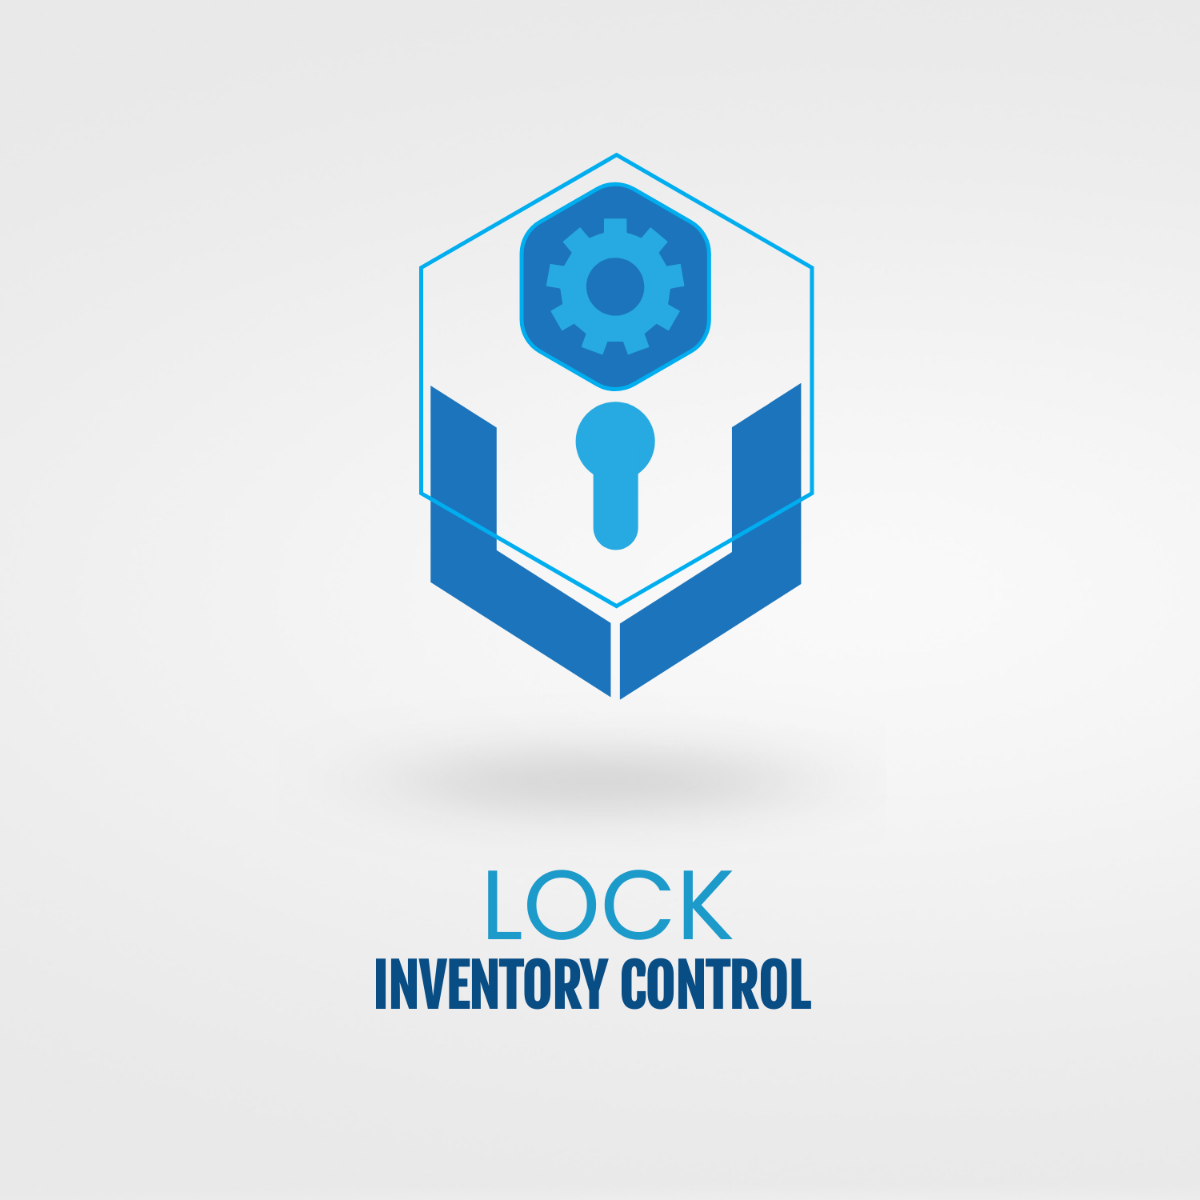 Free Inventory Control Lock Logo Template